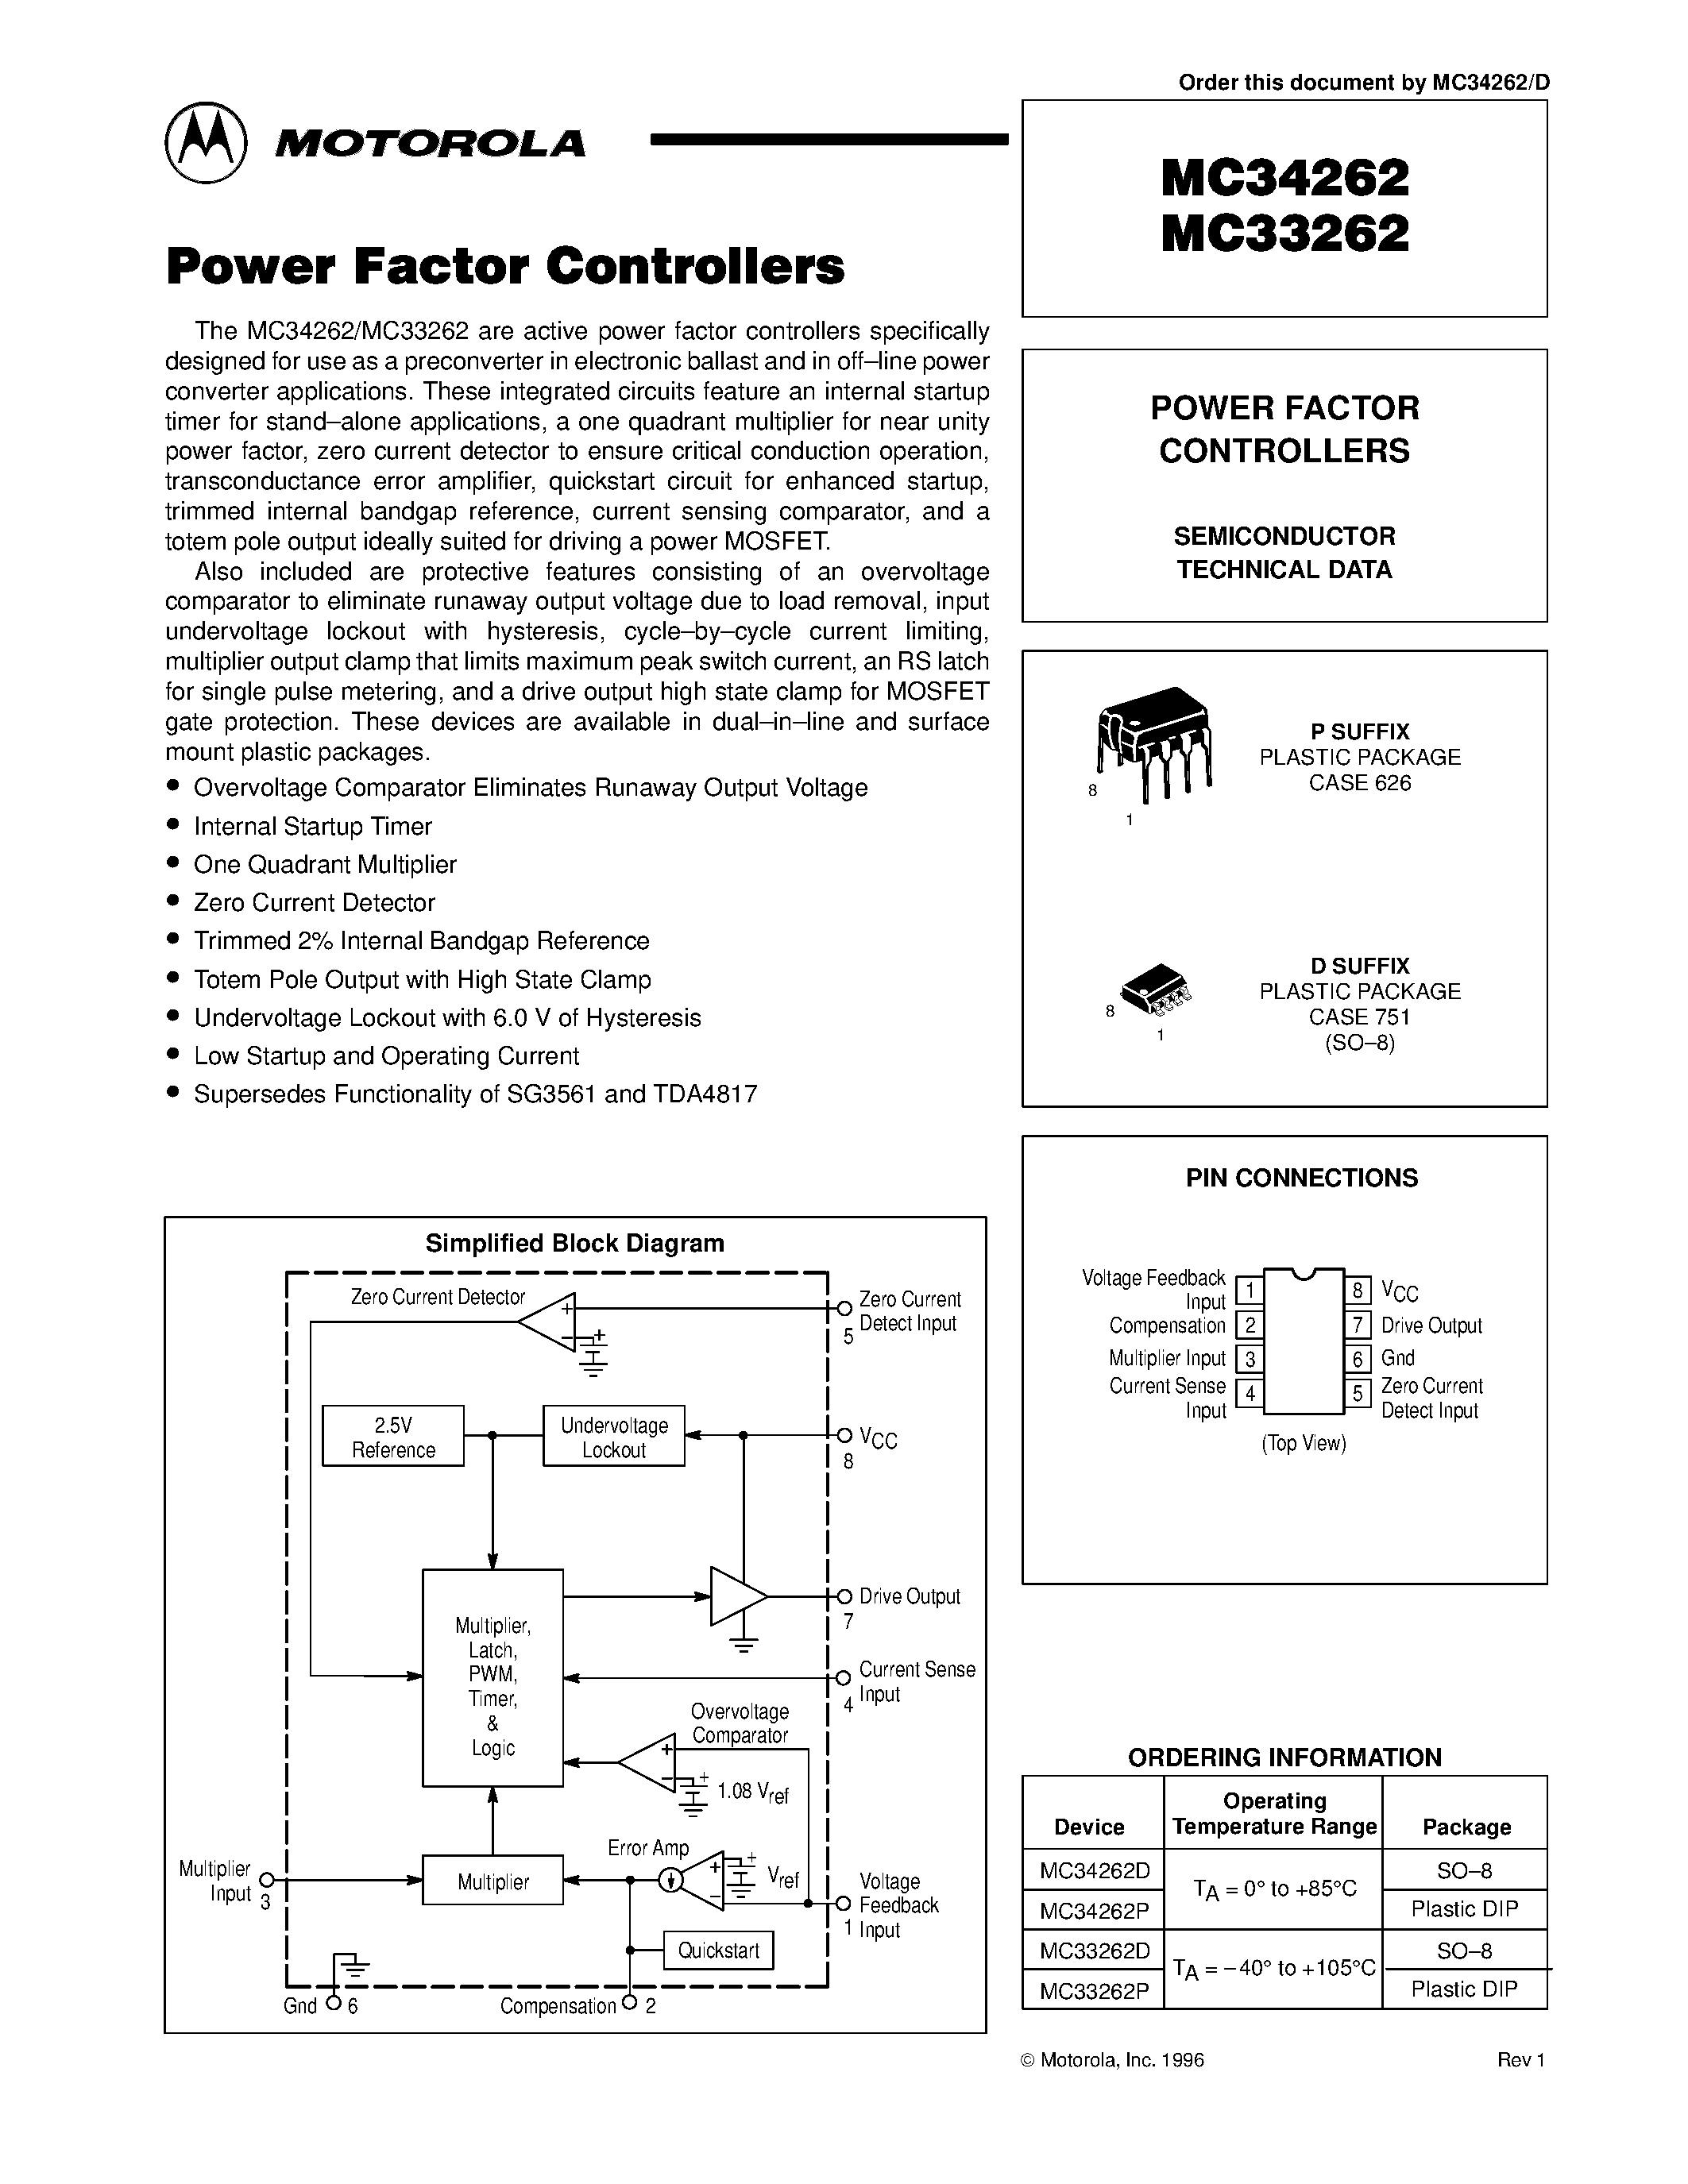 Даташит MC33262 - (MC33262 / MC34262) POWER FACTOR CONTROLLERS страница 1